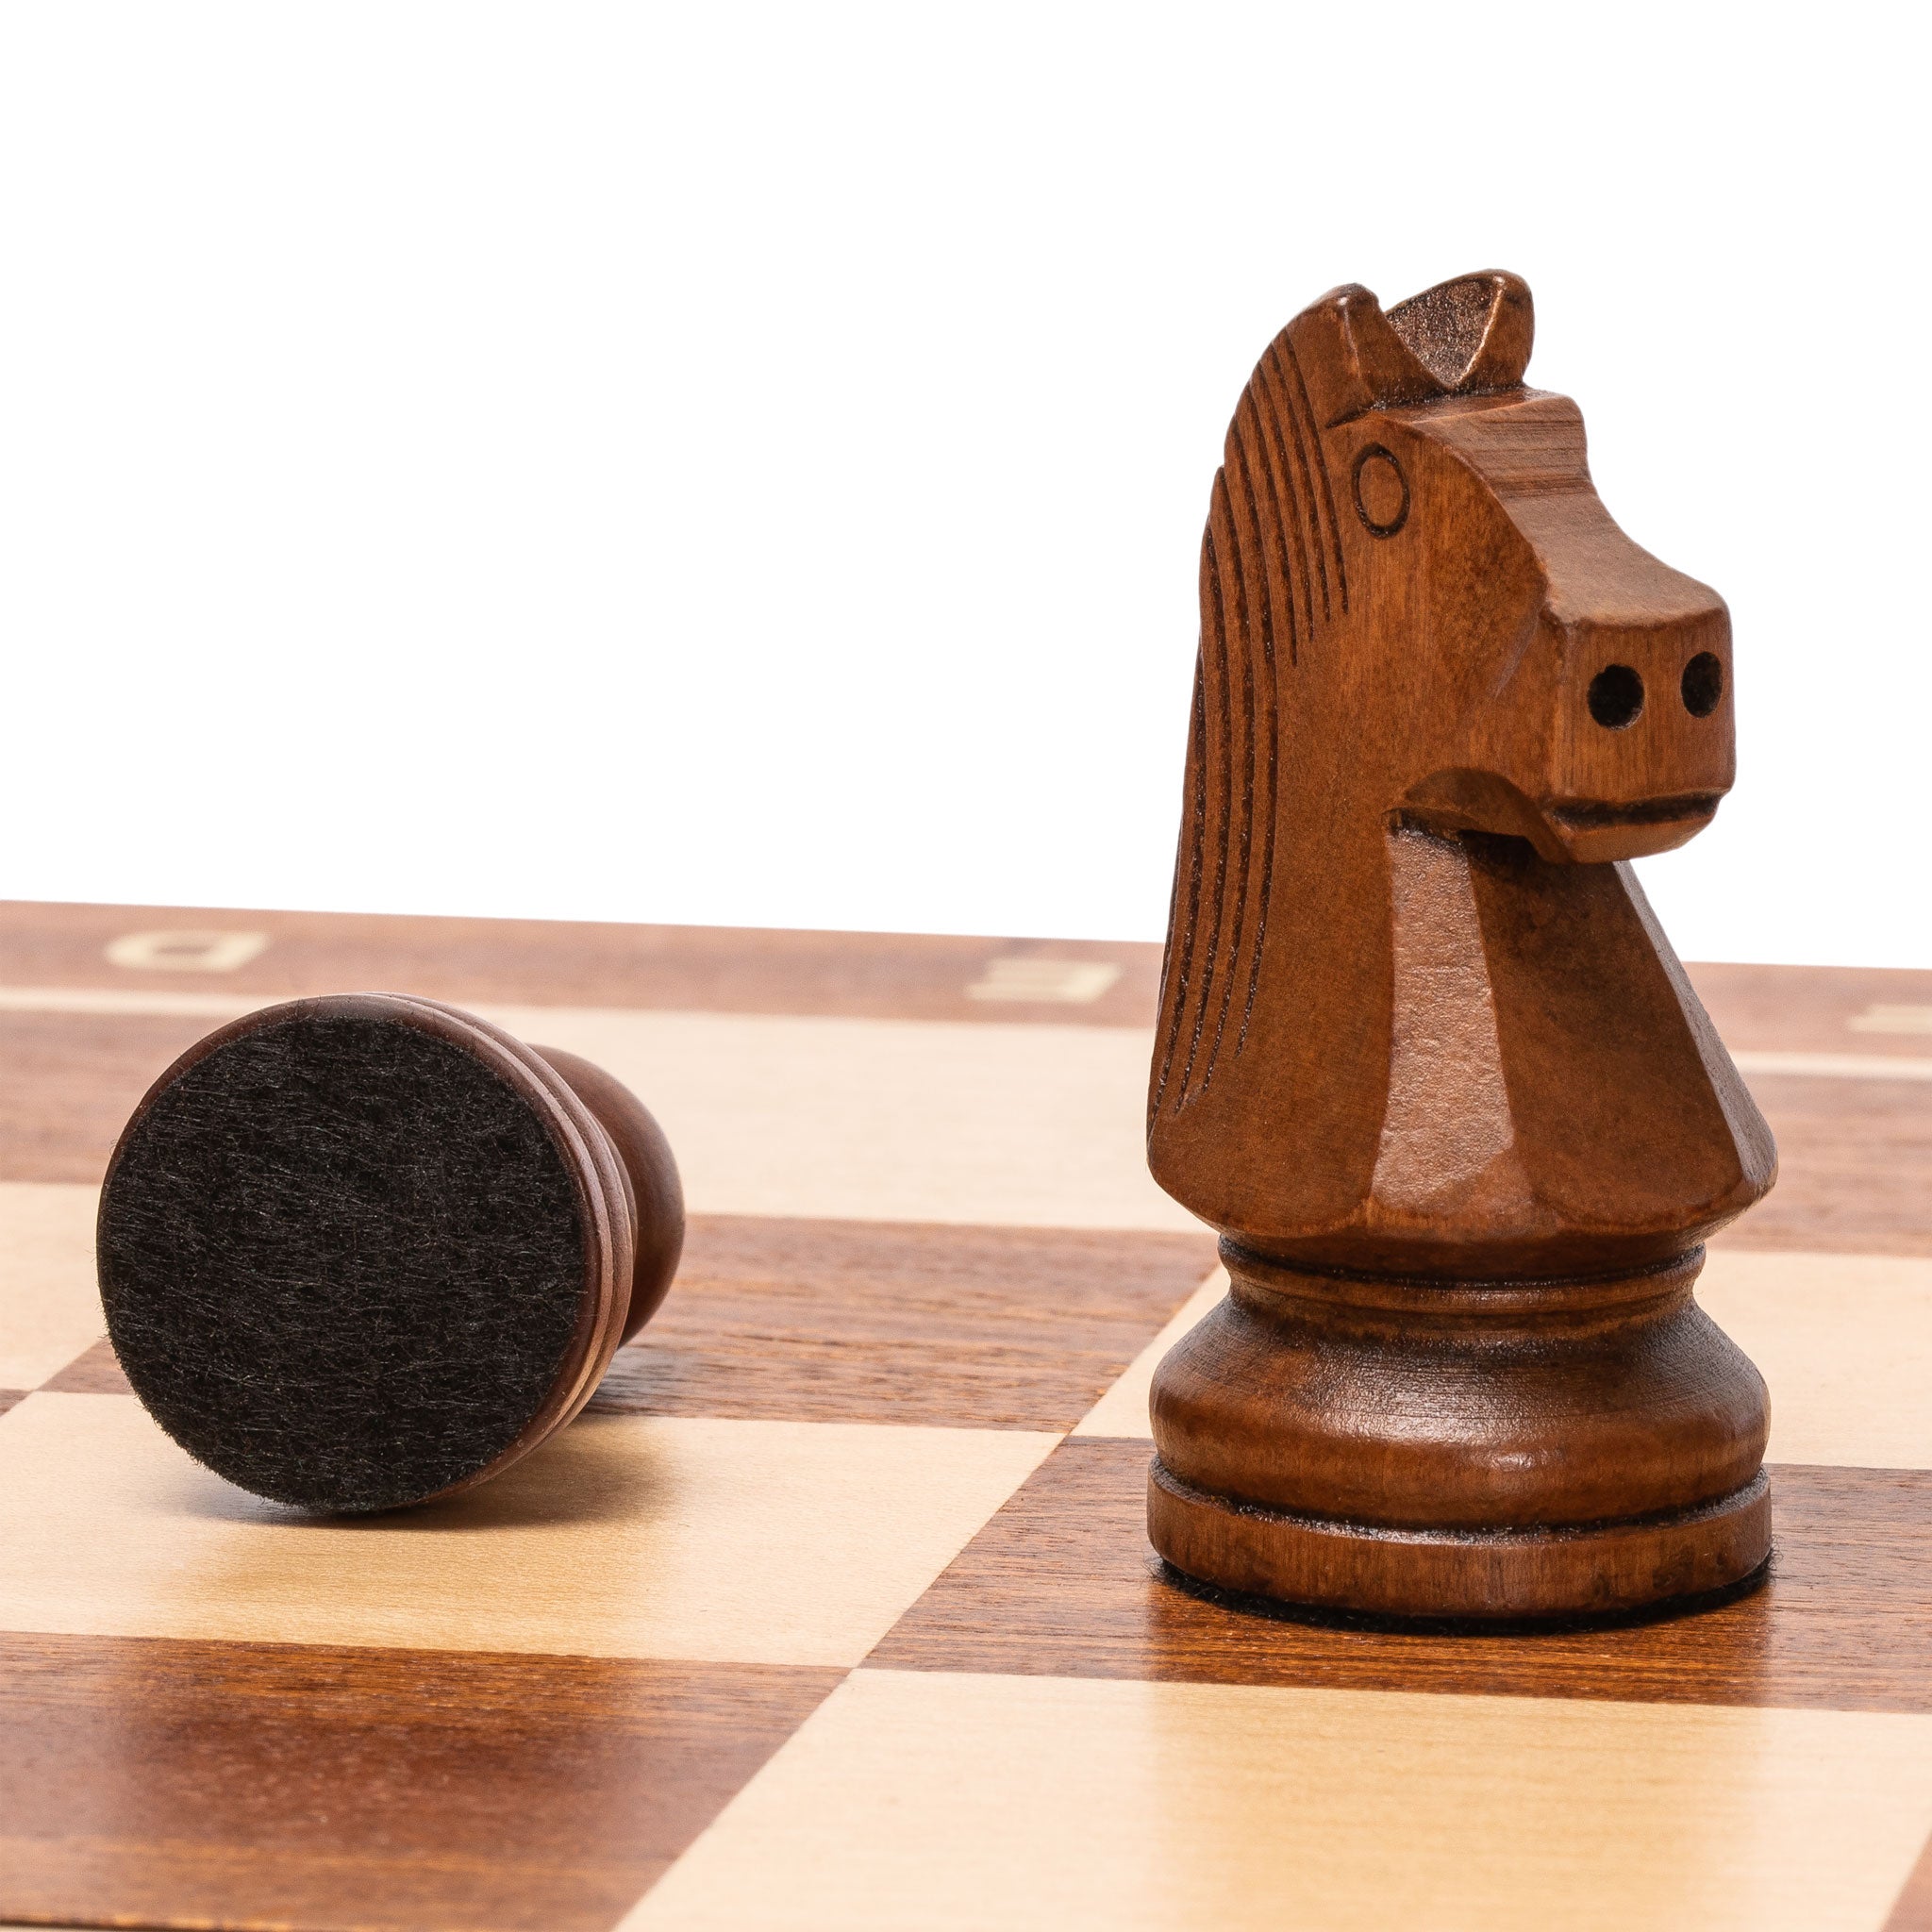 Husaria Professional Staunton Tournament No. 5 Wooden Chess Game Set, 3.6" Kings-Husaria